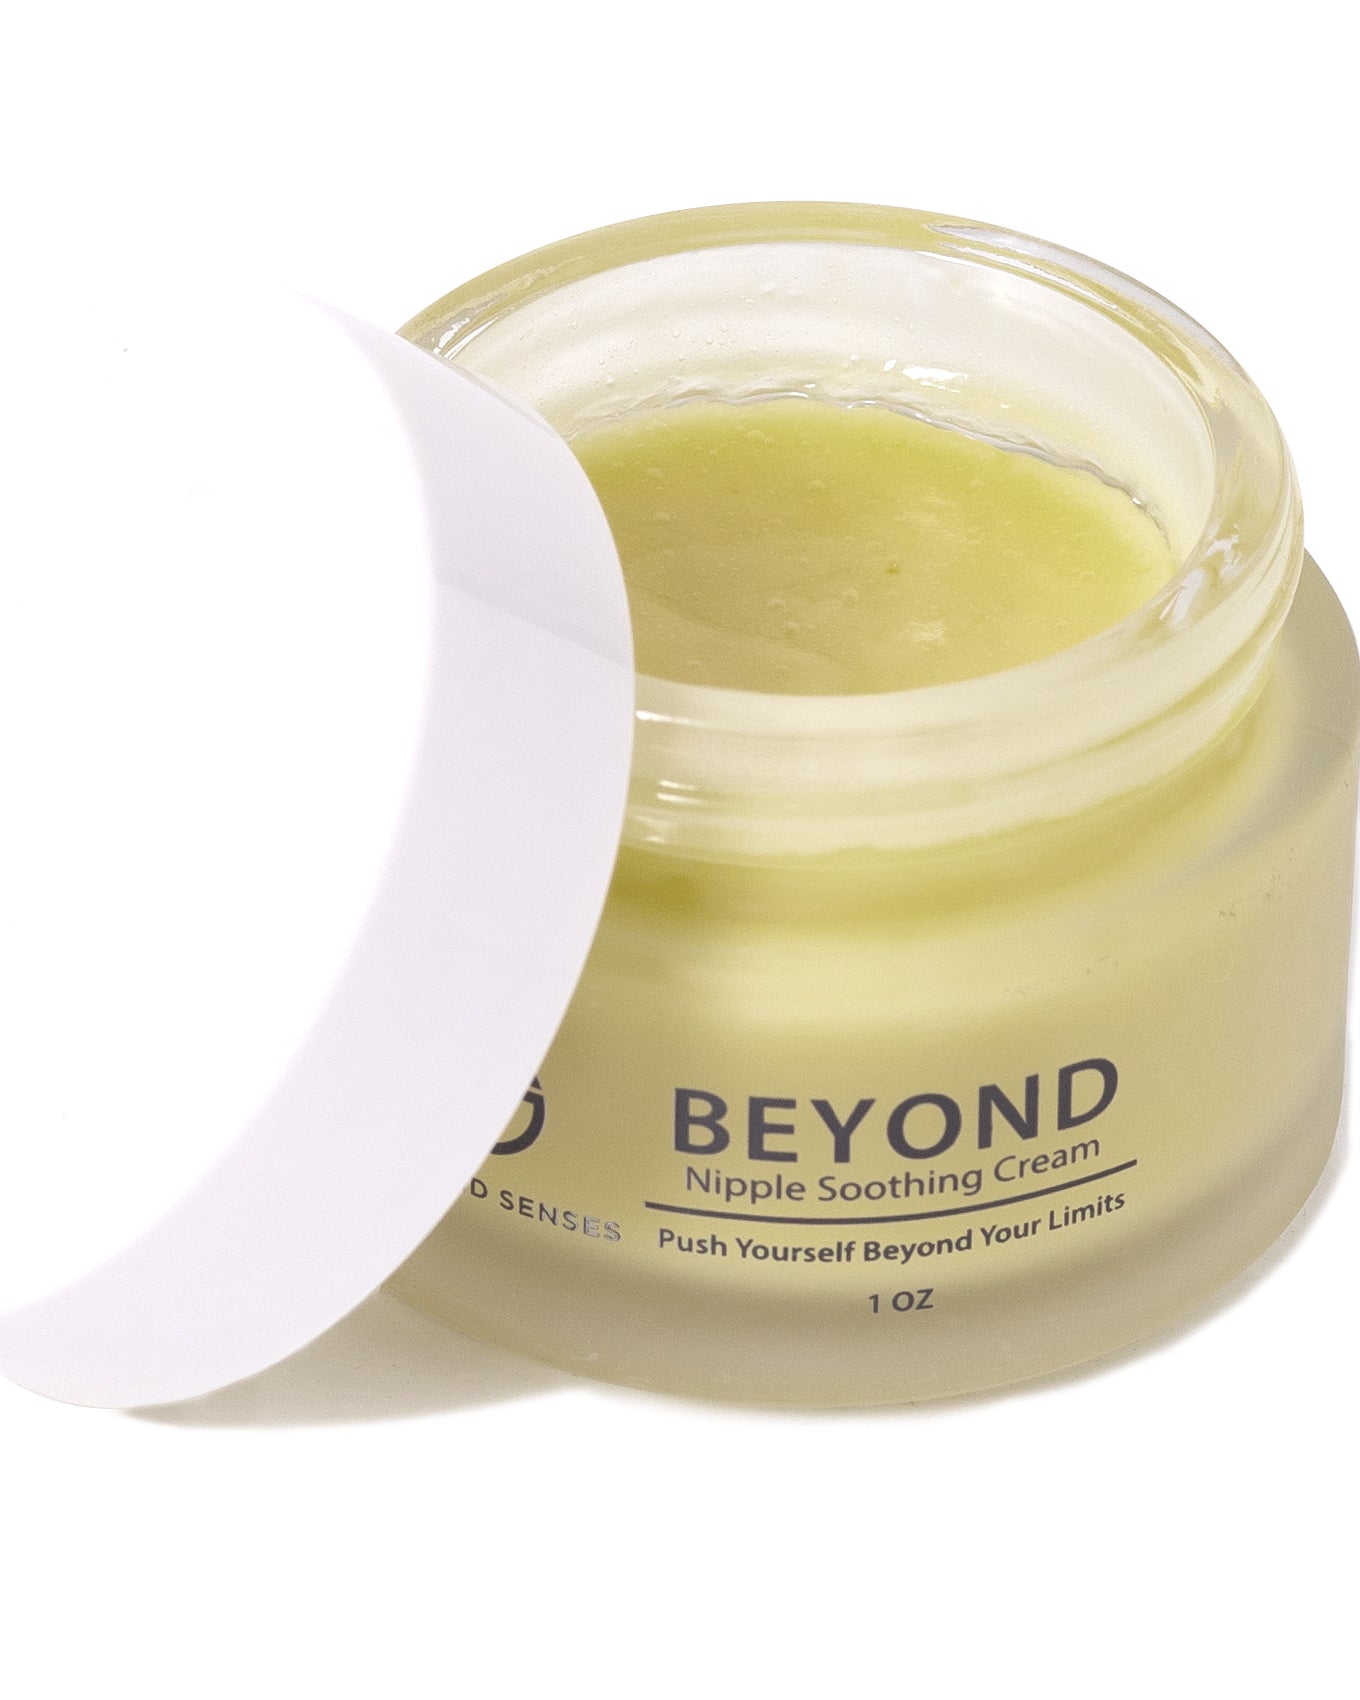 skin and senses beyong nipple soothing cream